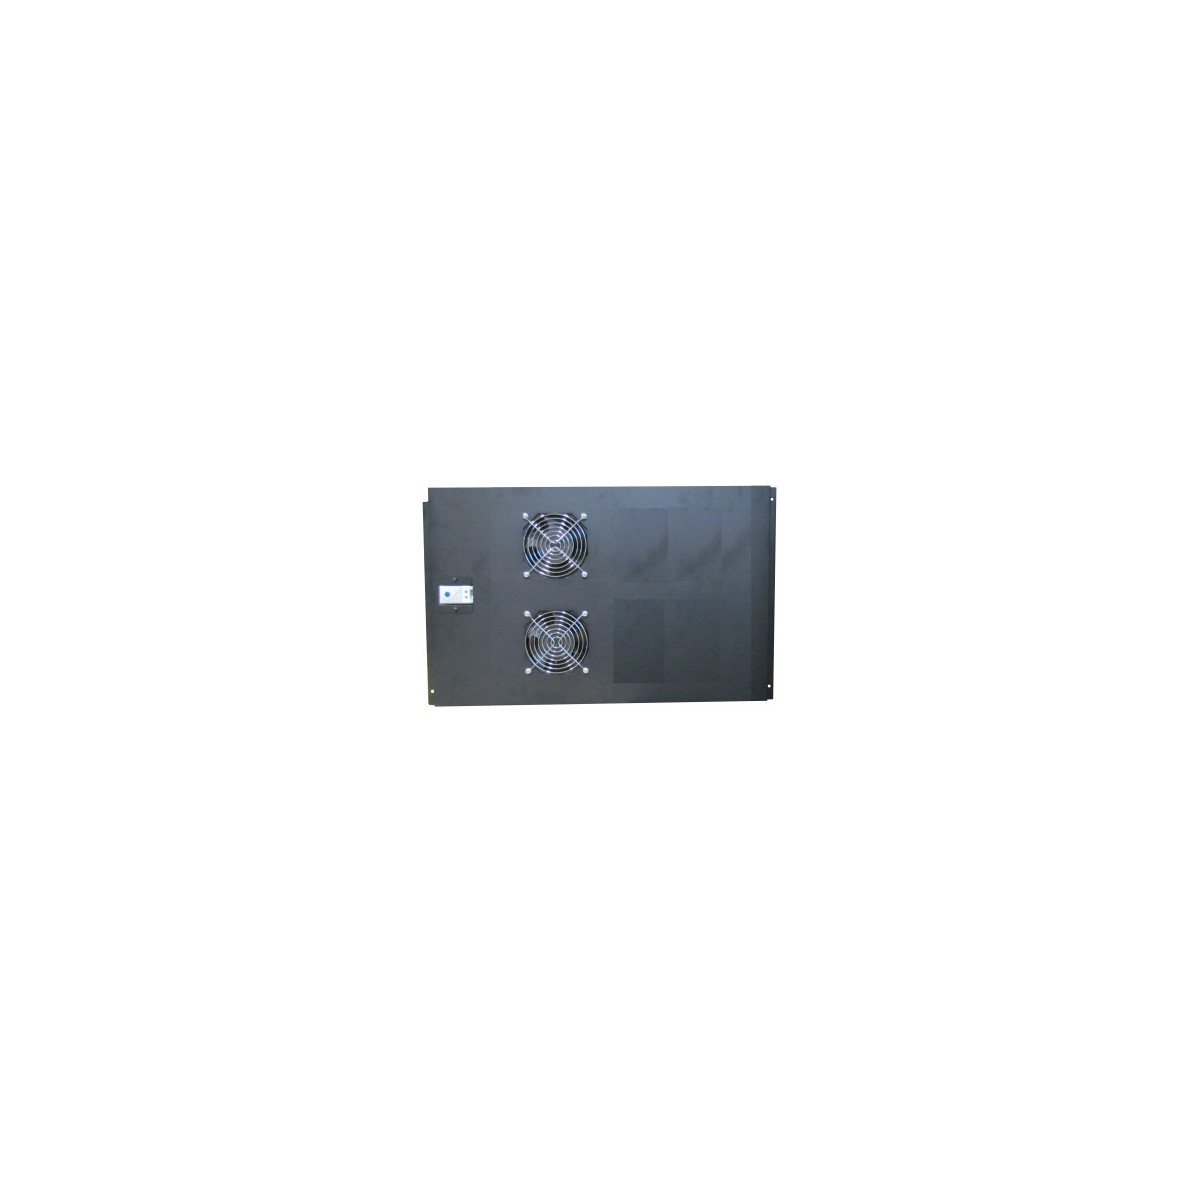 WP WPN ACS N060 2 hardware accesorio de refrigeracion Negro